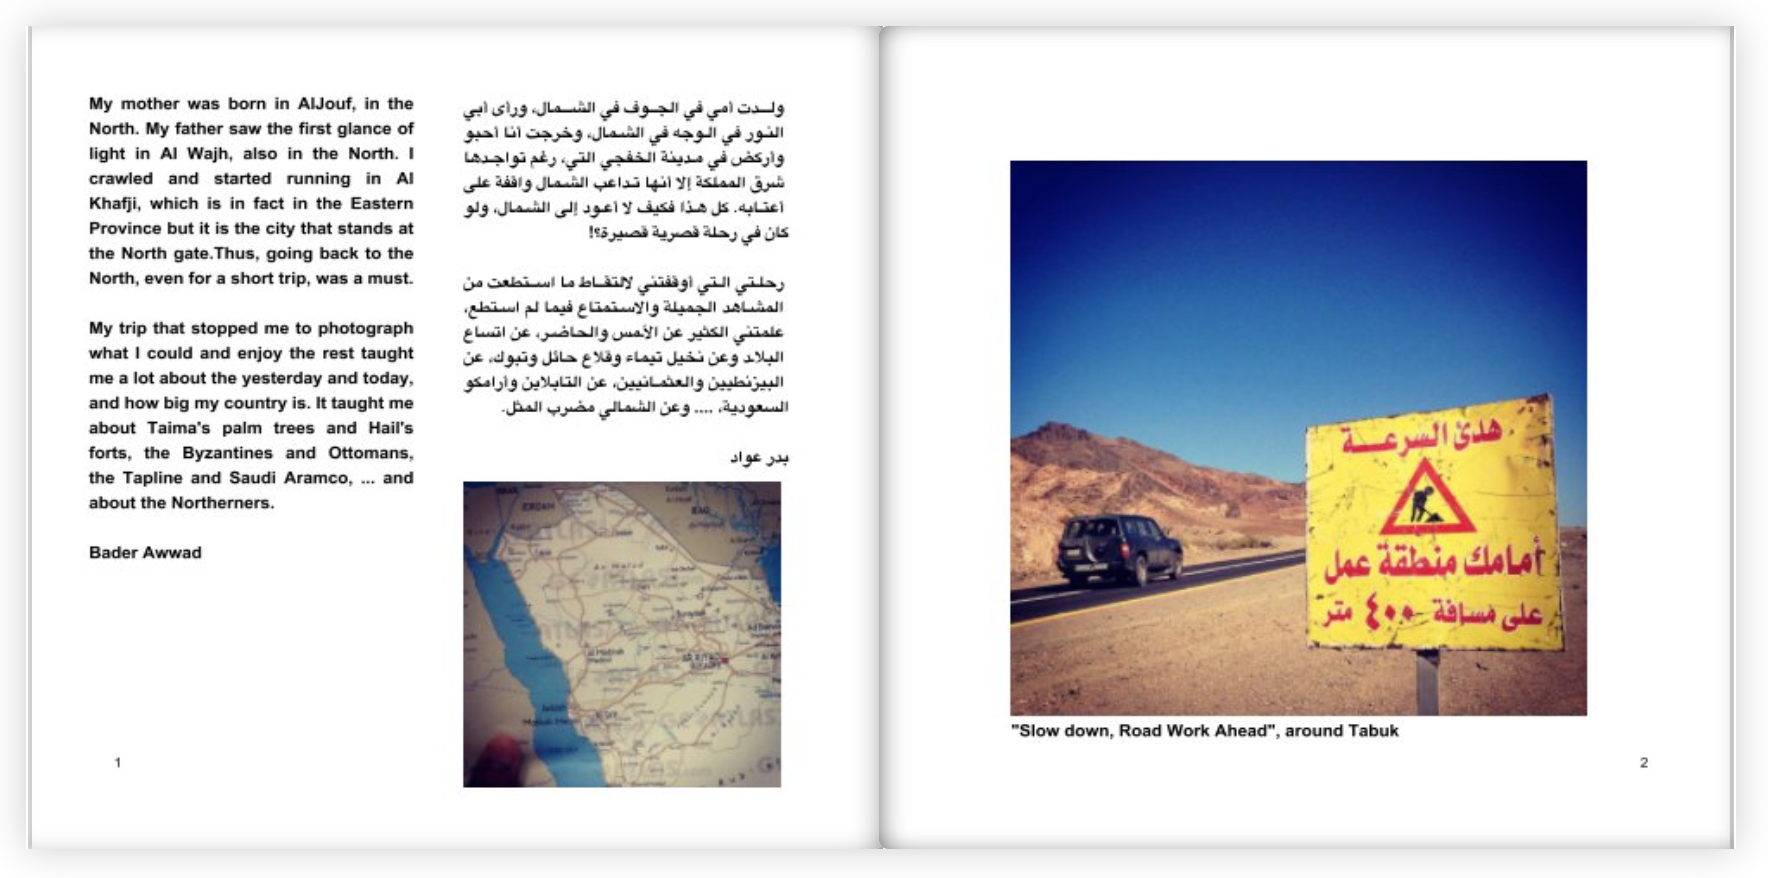 Road-to-the-North-Bader-awwad-albalawi-photobook-introduction.png